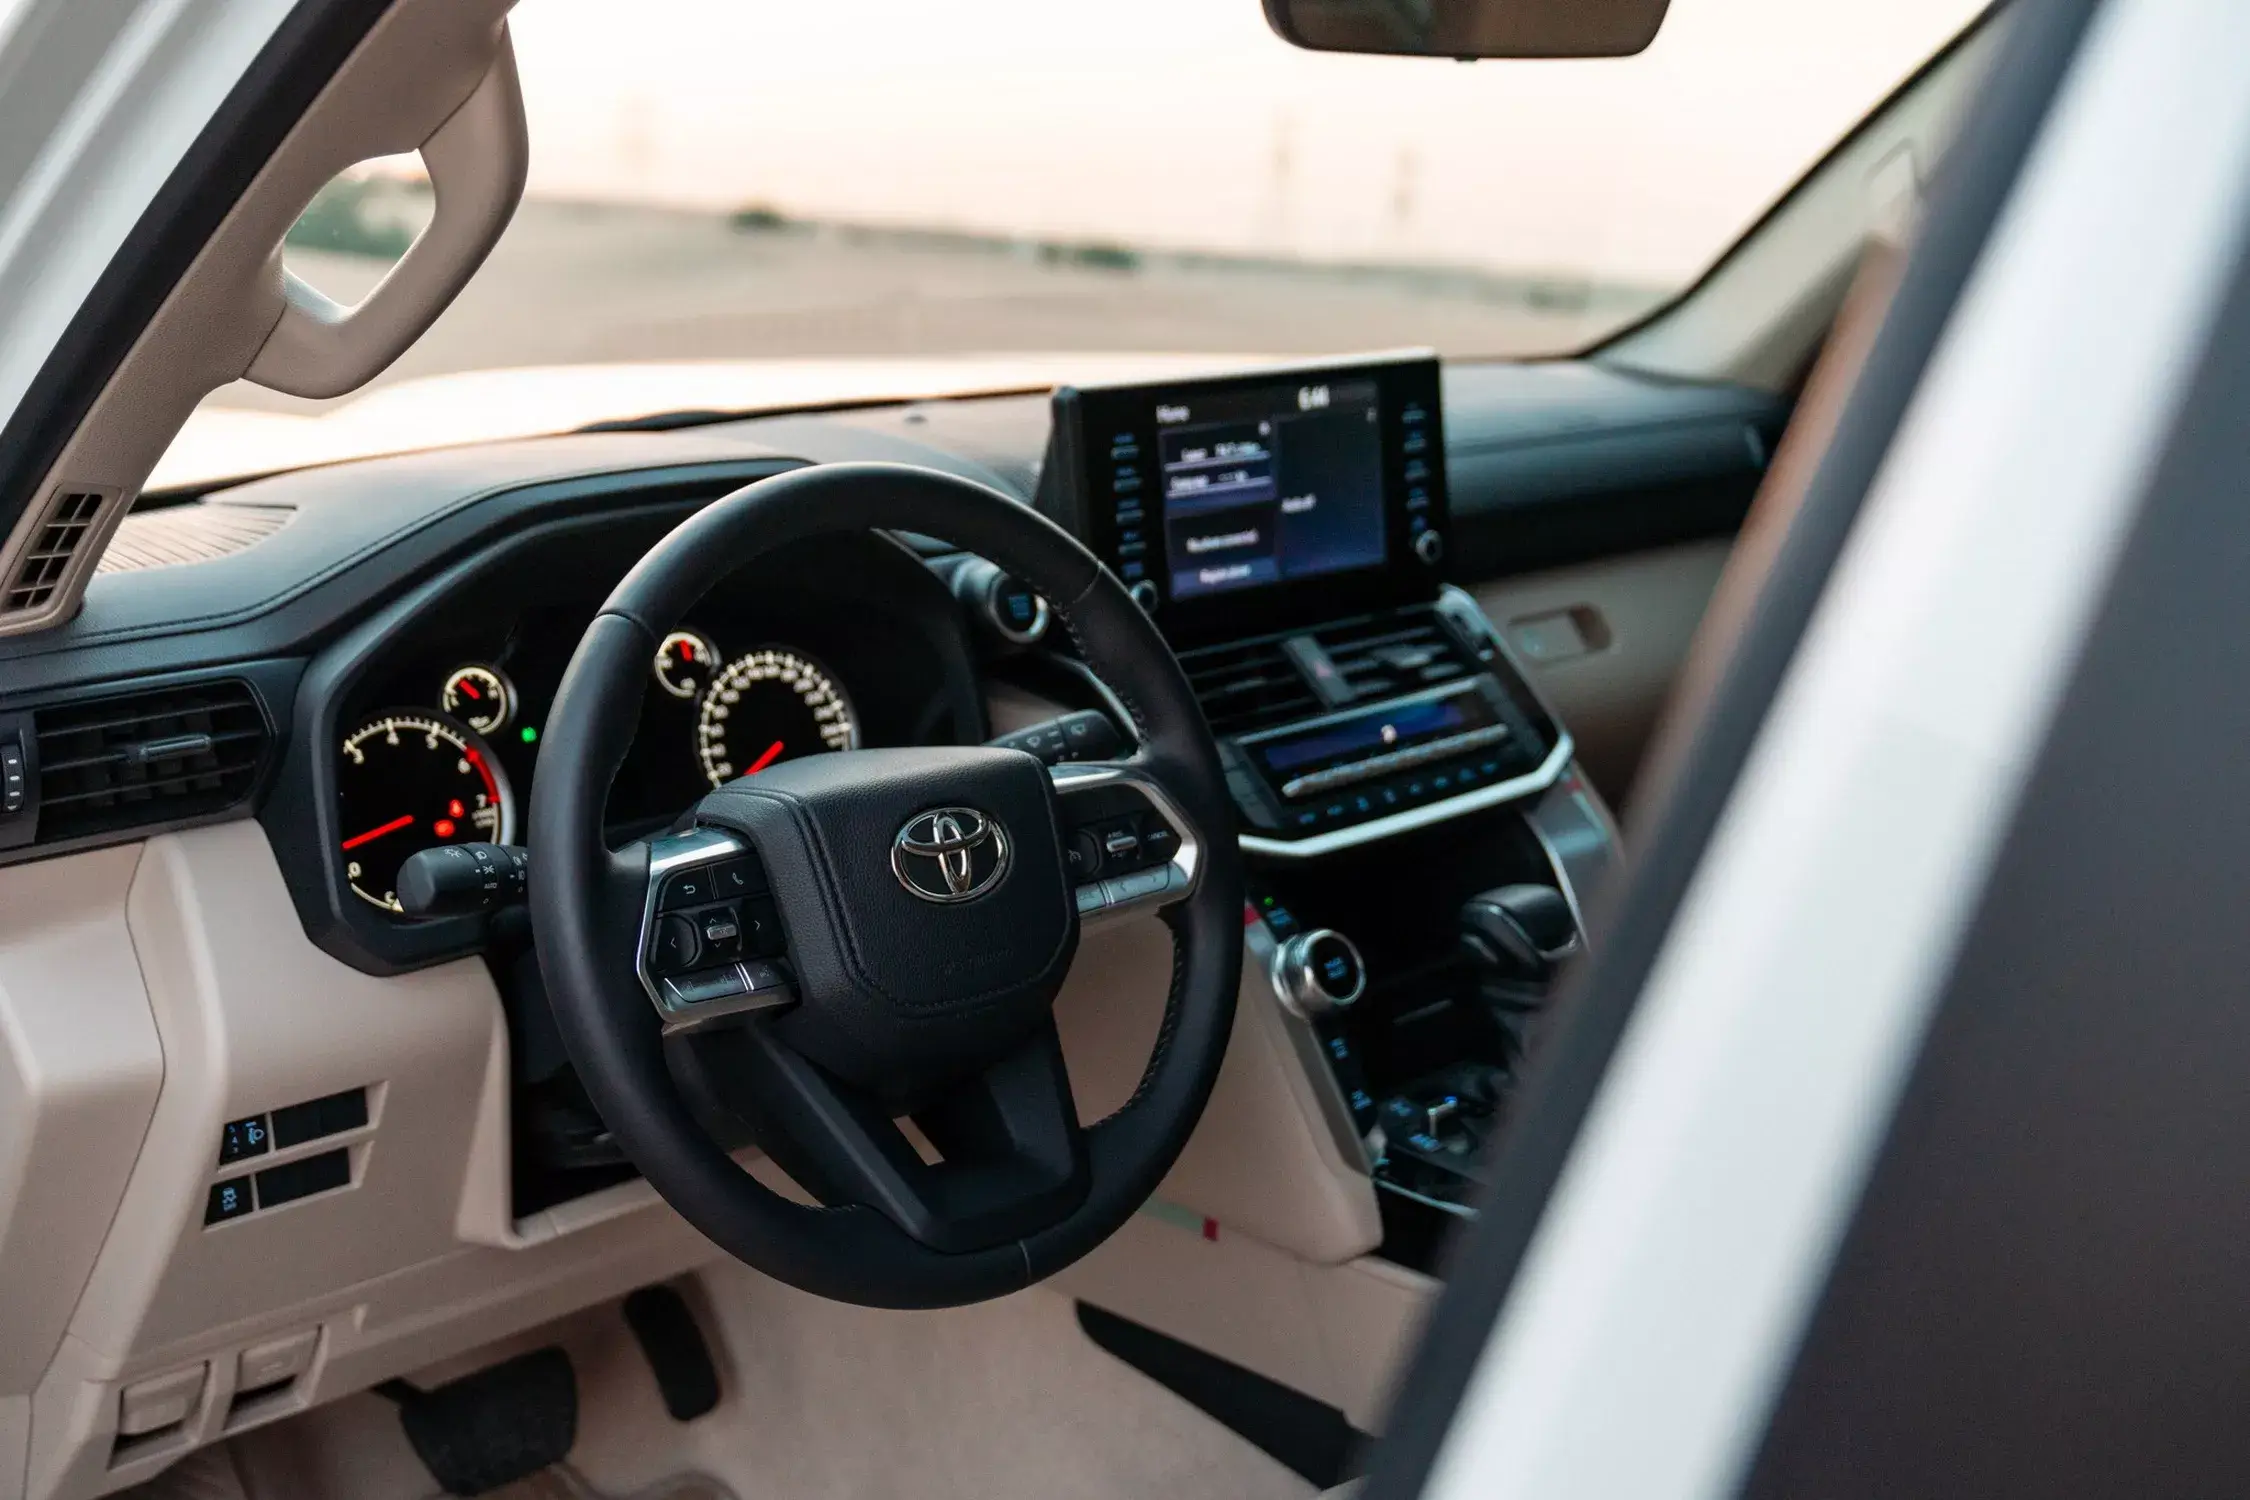 The Toyota Land Cruiser 300 SUV received a special “Dakar” version